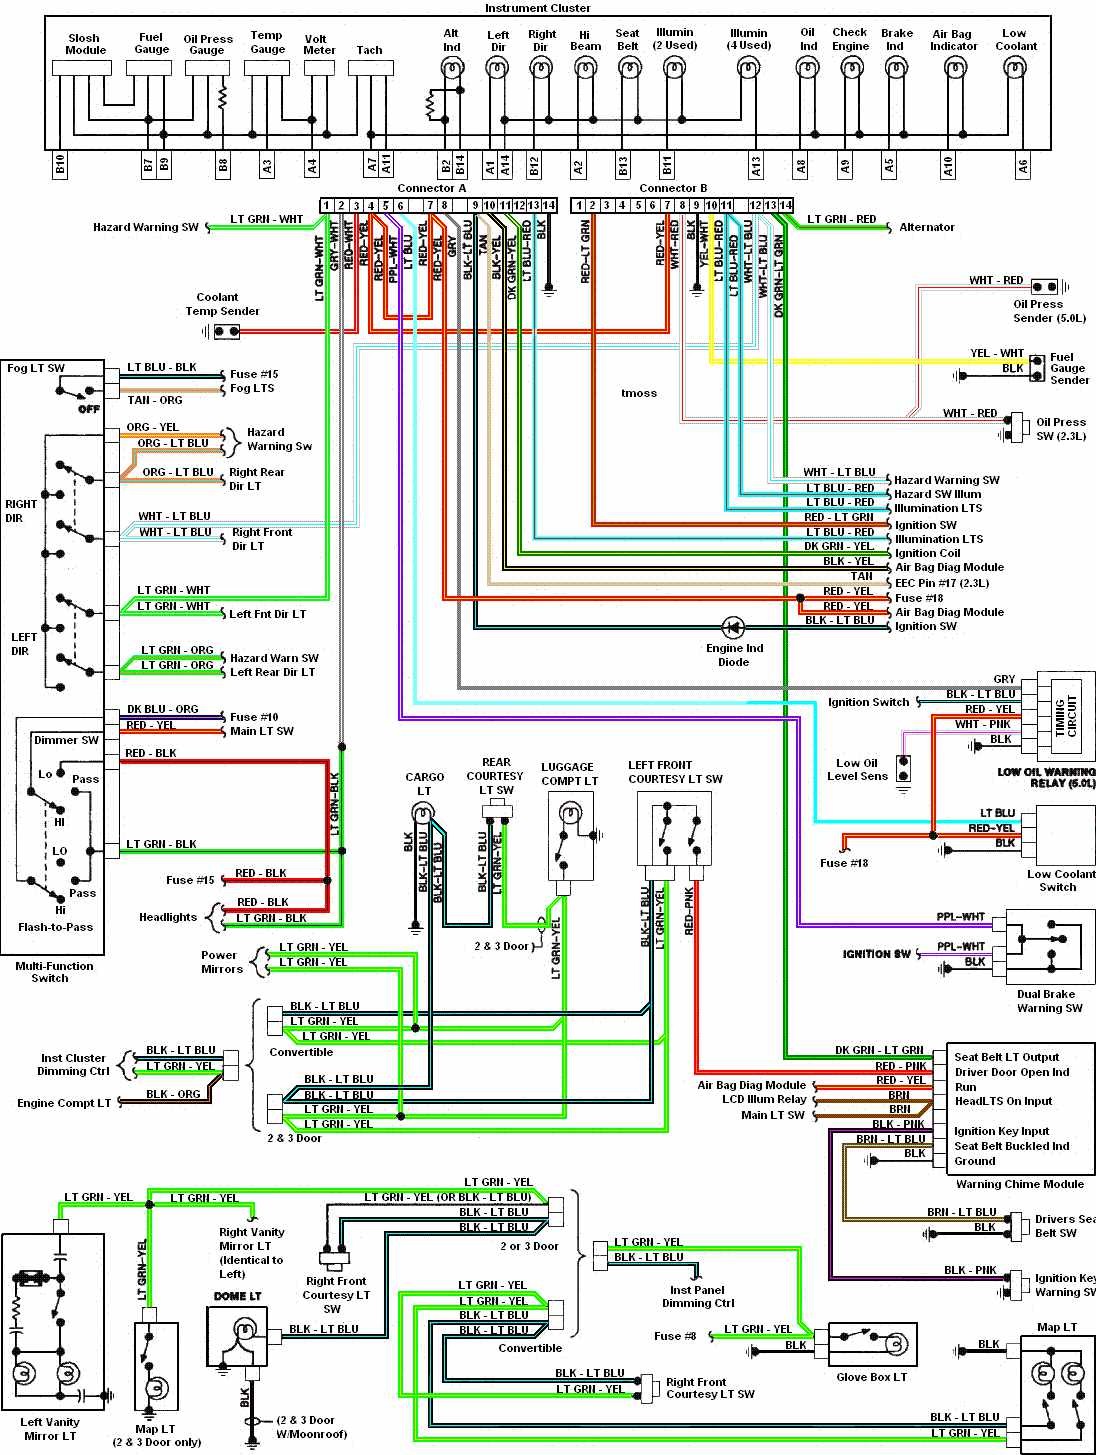 96 mustang gt wiring diagram schematics wiring diagrams u2022 rh seniorlivinguniversity co 2001 Mustang Spark Plug Wire Diagram 1966 Mustang Spark Plug Wire